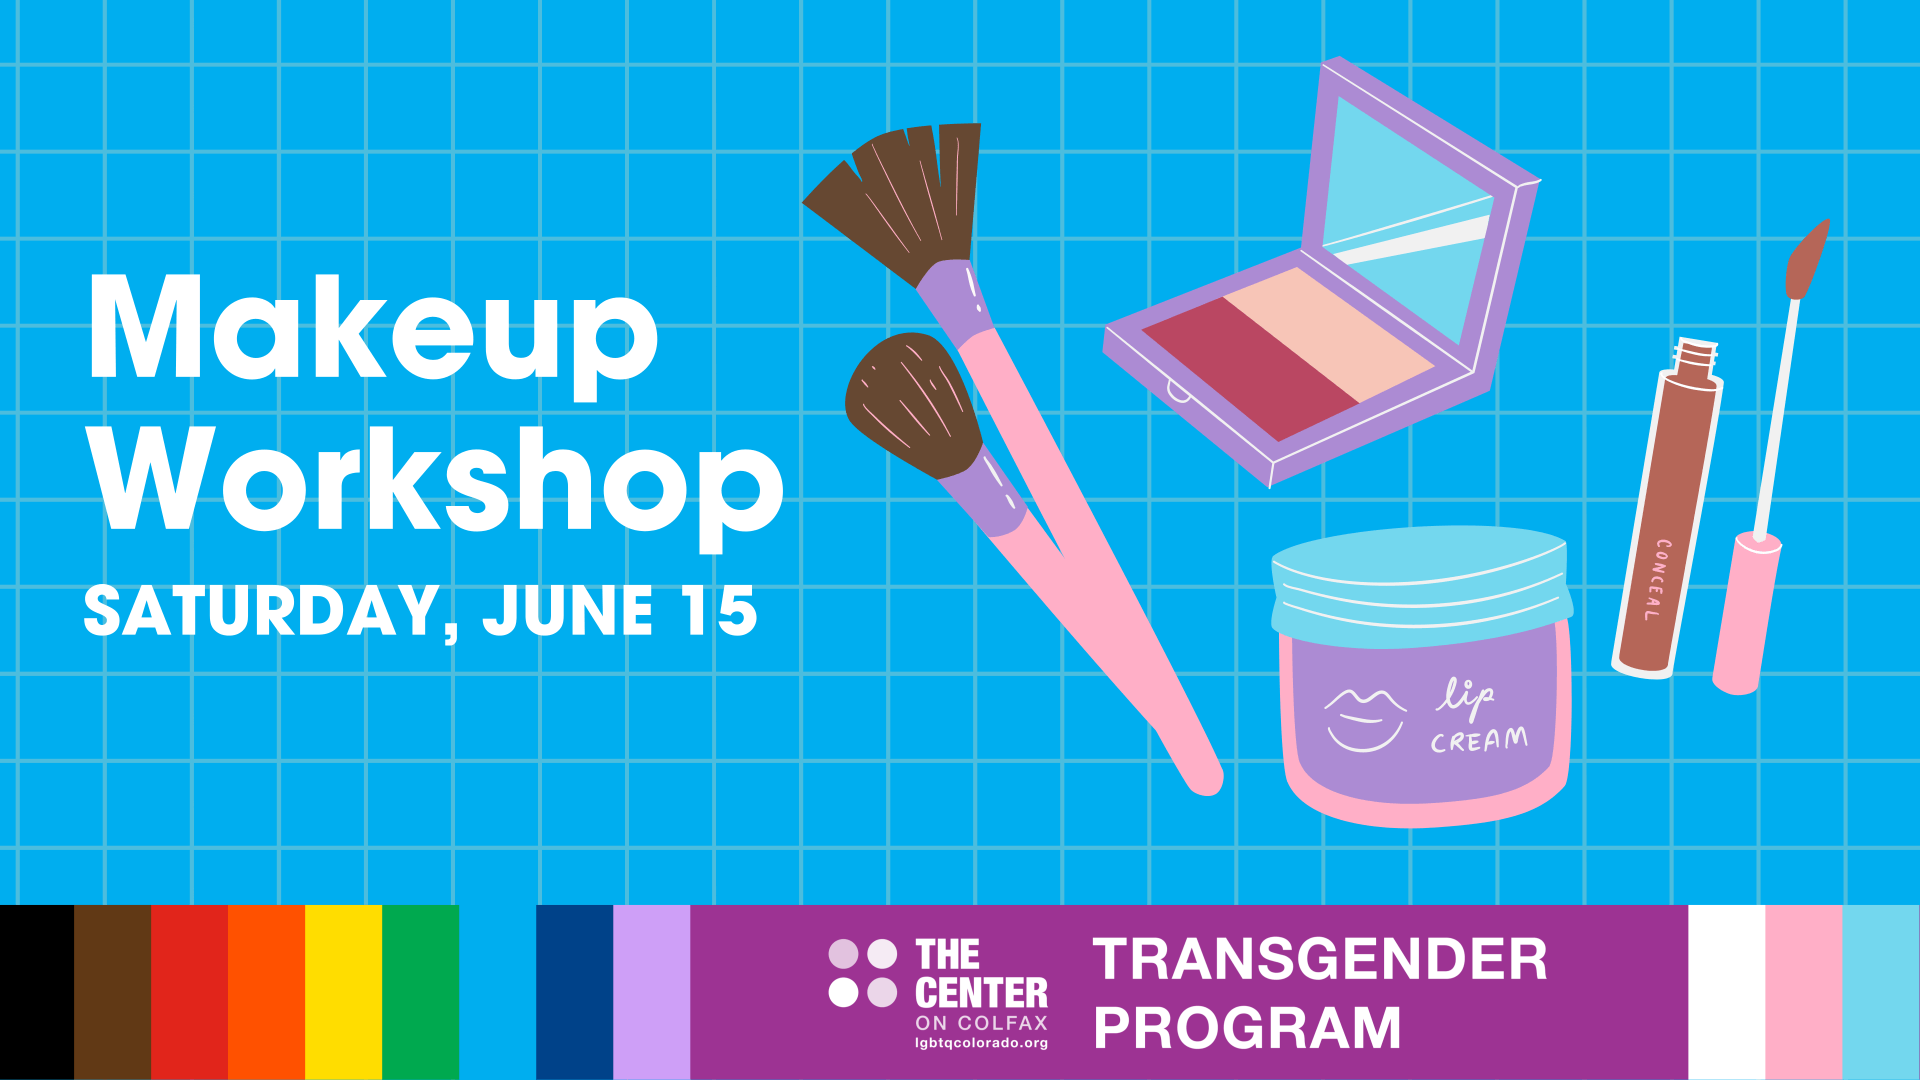 Makeup Workshop for Trans Women - Saturday, June 15, 2:00 - 4:00 PM